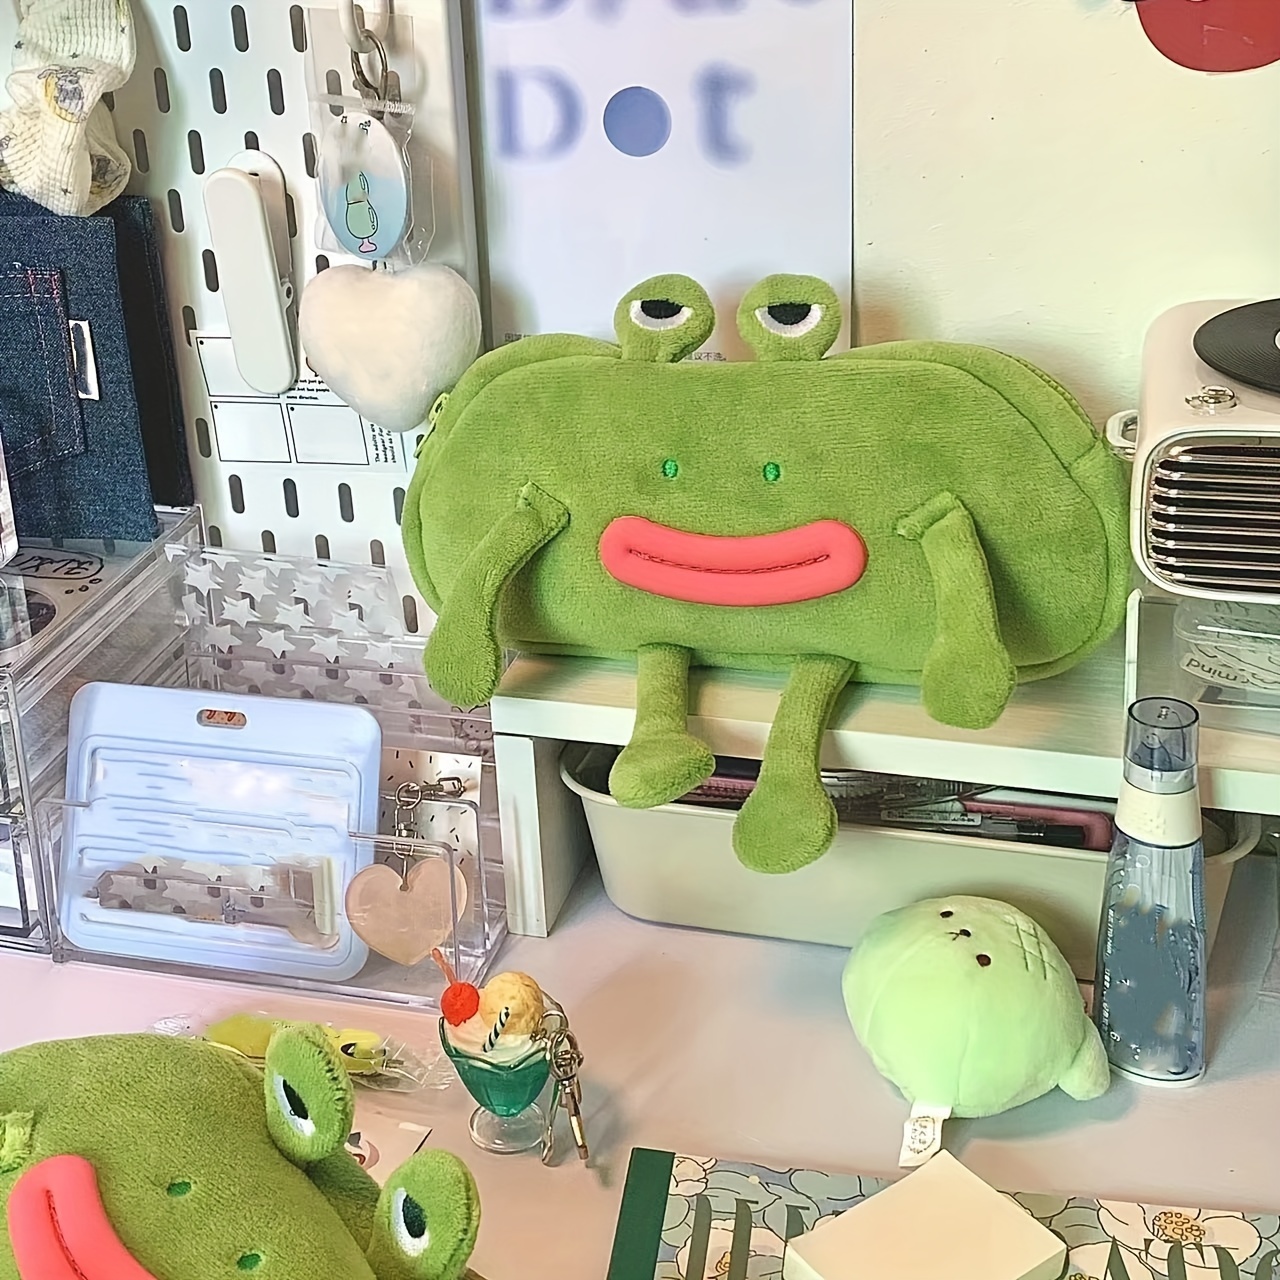 Petmoko Frog Plush Doll Crossbody Bag,Cute Frog Plush Toy Crossbody Bag Shoulder Bags Frog Soft Stuffed Plush Toy Backpack Animal Stuffed Toys Frogs